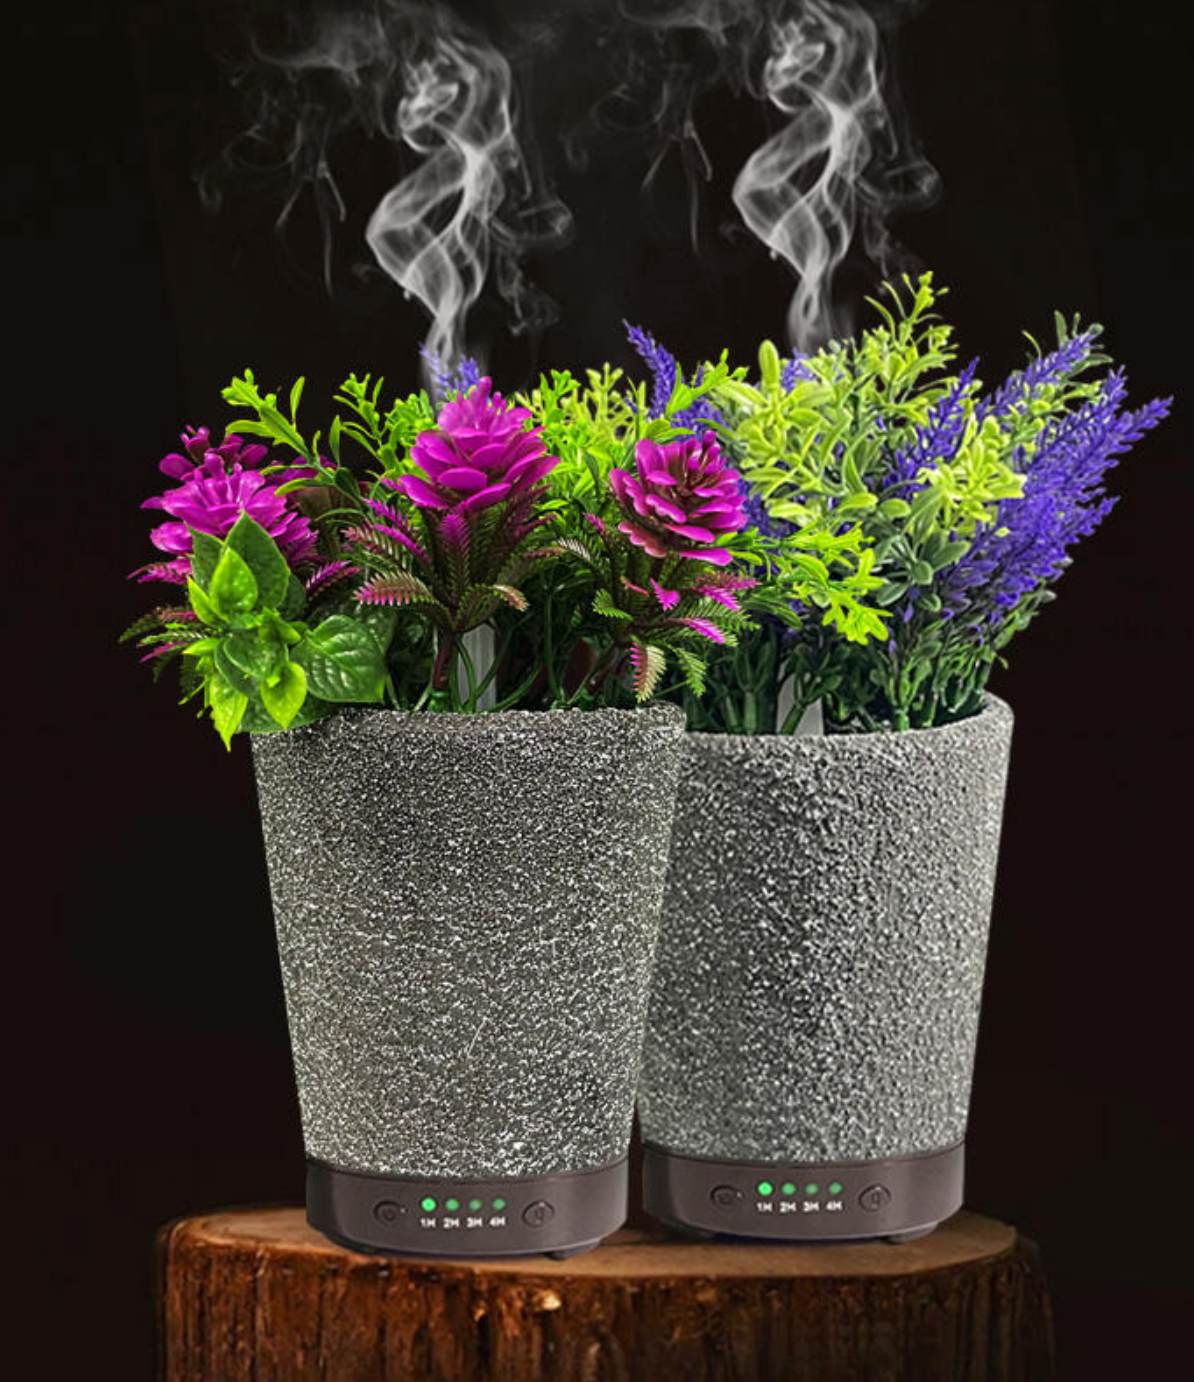 NOU: Umidificator/Difuzor aromaterapie in forma de ghiveci cu flori, 7 culori programabil, oprire automata